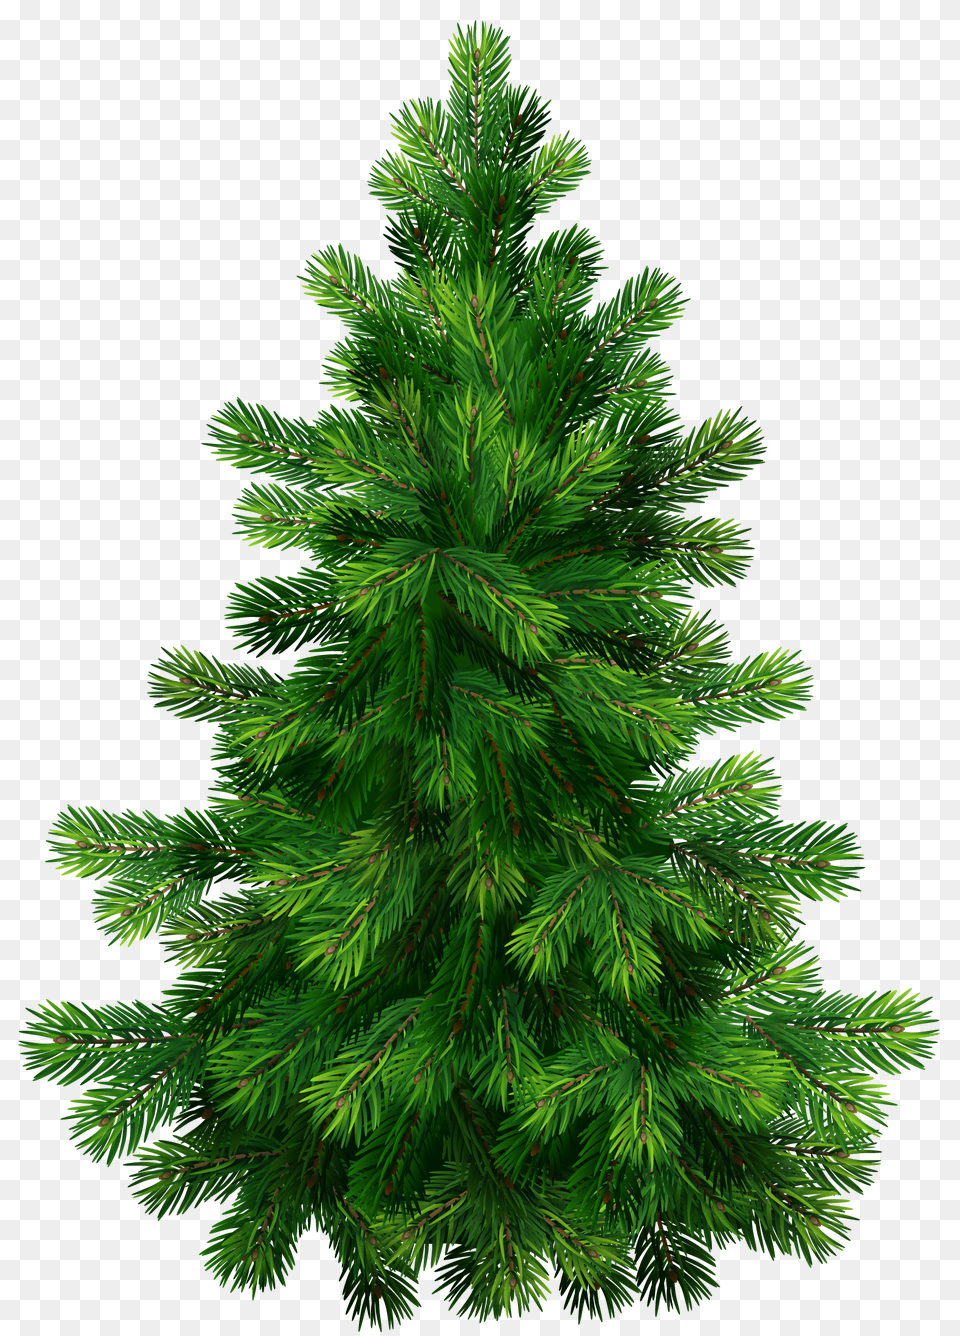 Fir Tree Purepng Free Transparent Cc0 Fir Tree, Pine, Plant, Conifer, Vegetation Png Image